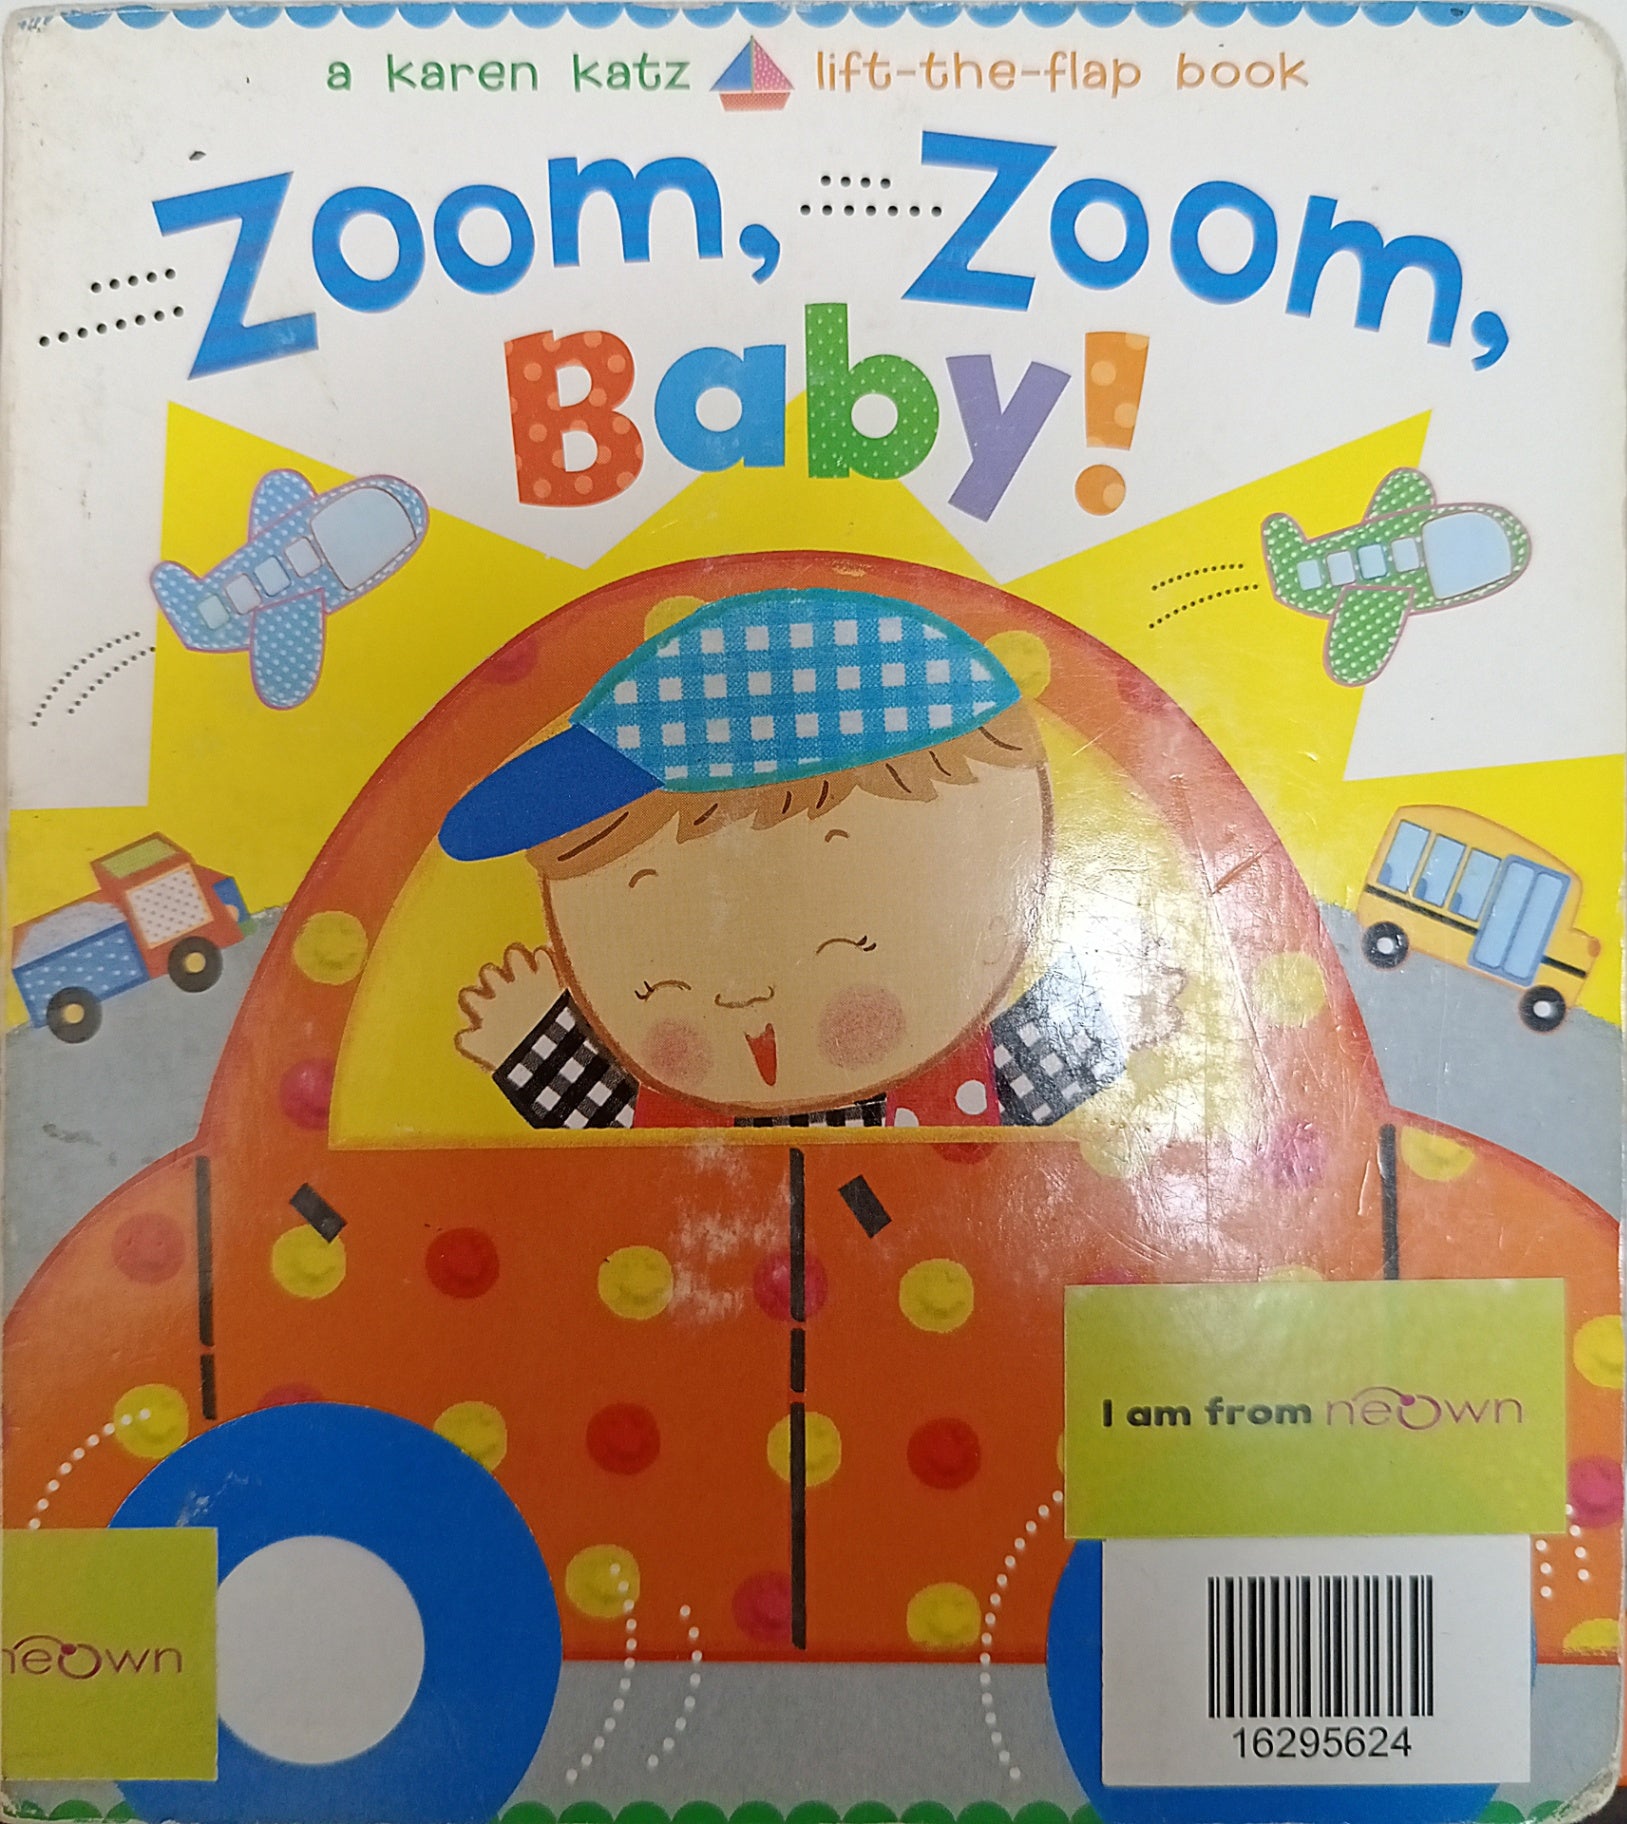 Zoom, Zoom Baby!